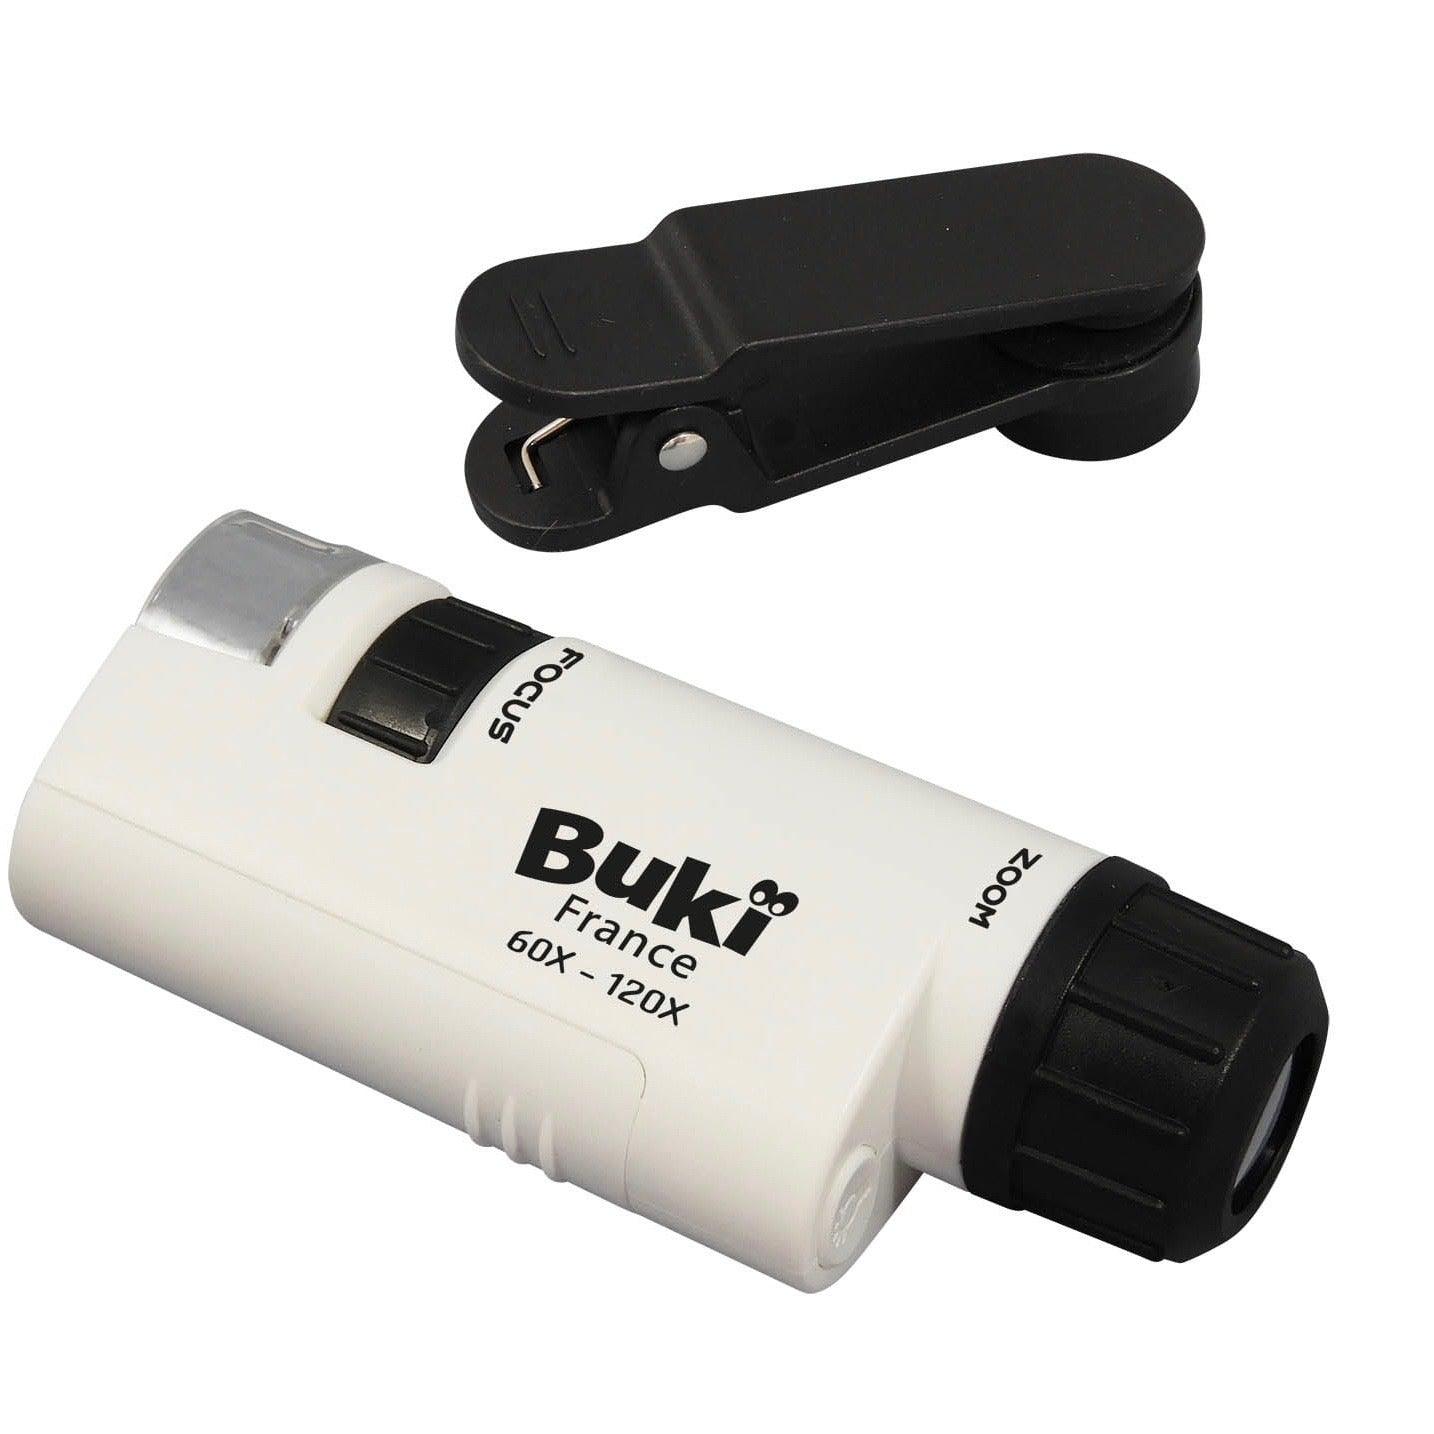 Buki: Pocket Microscope